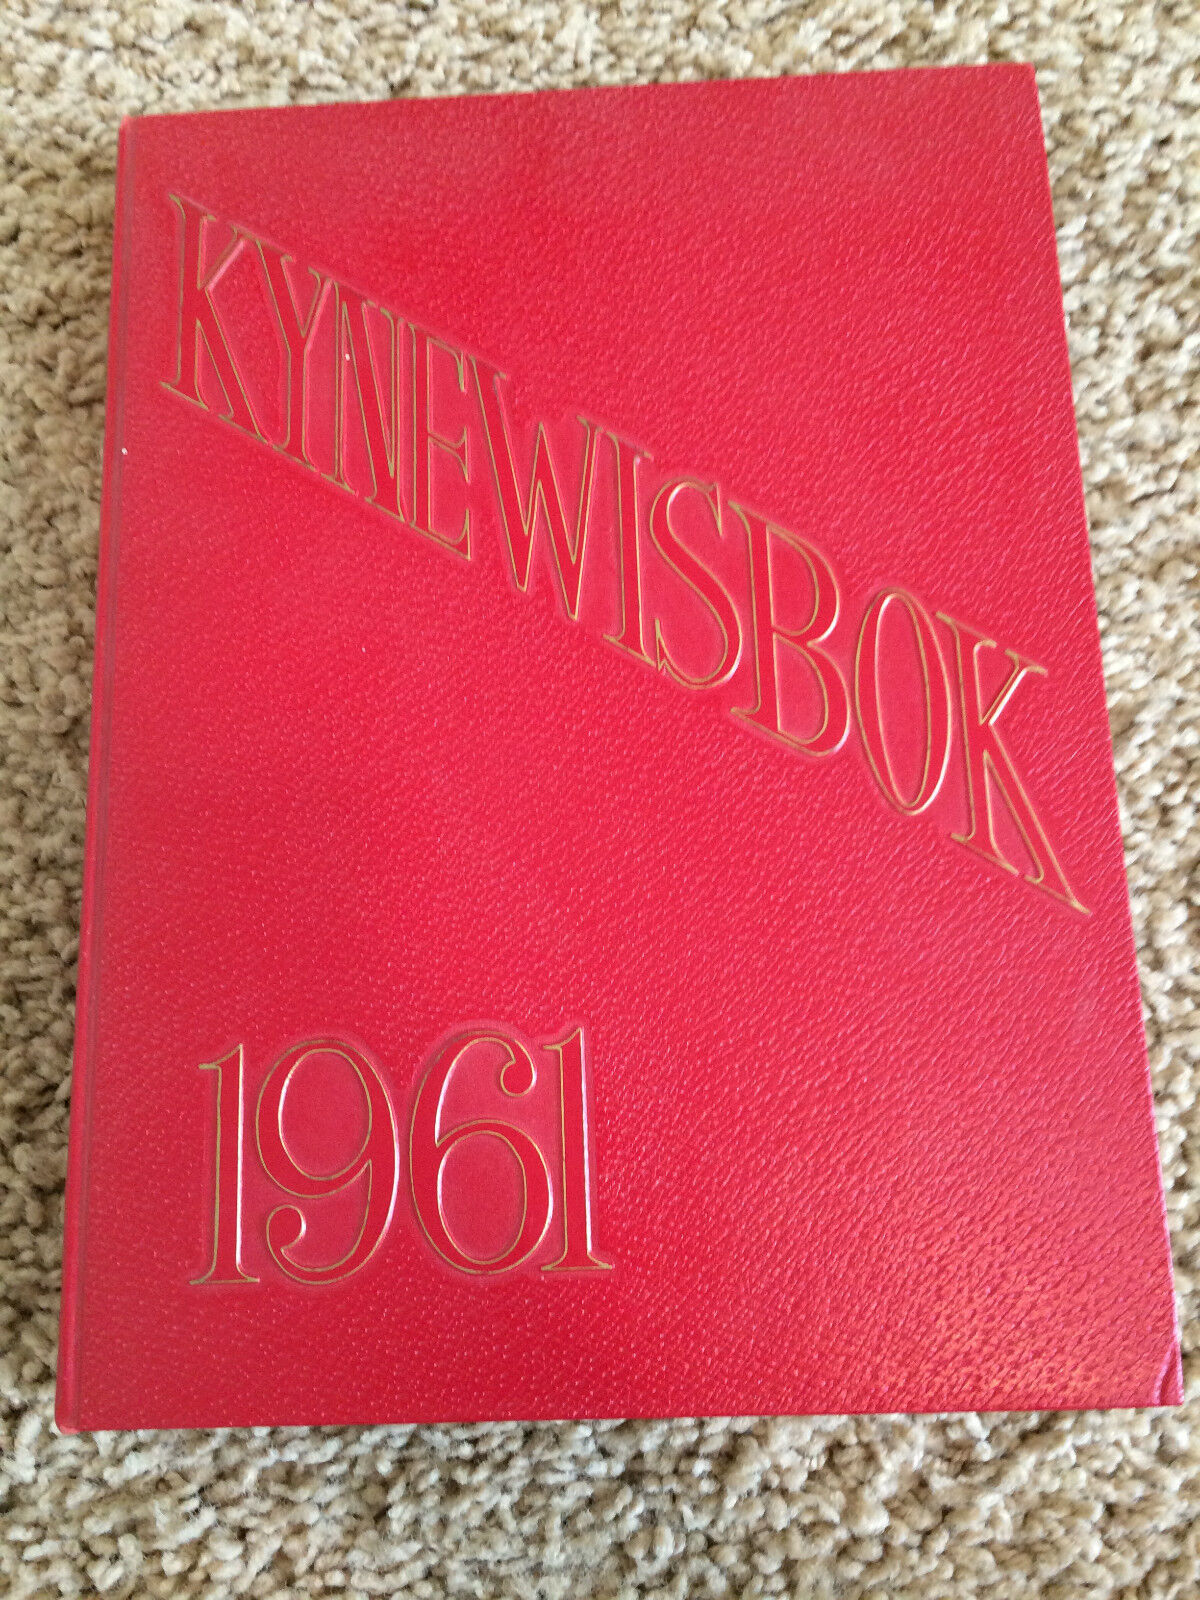 University of Denver 1961 Kynewisbok Yearbook Denver, CO ORIGINAL